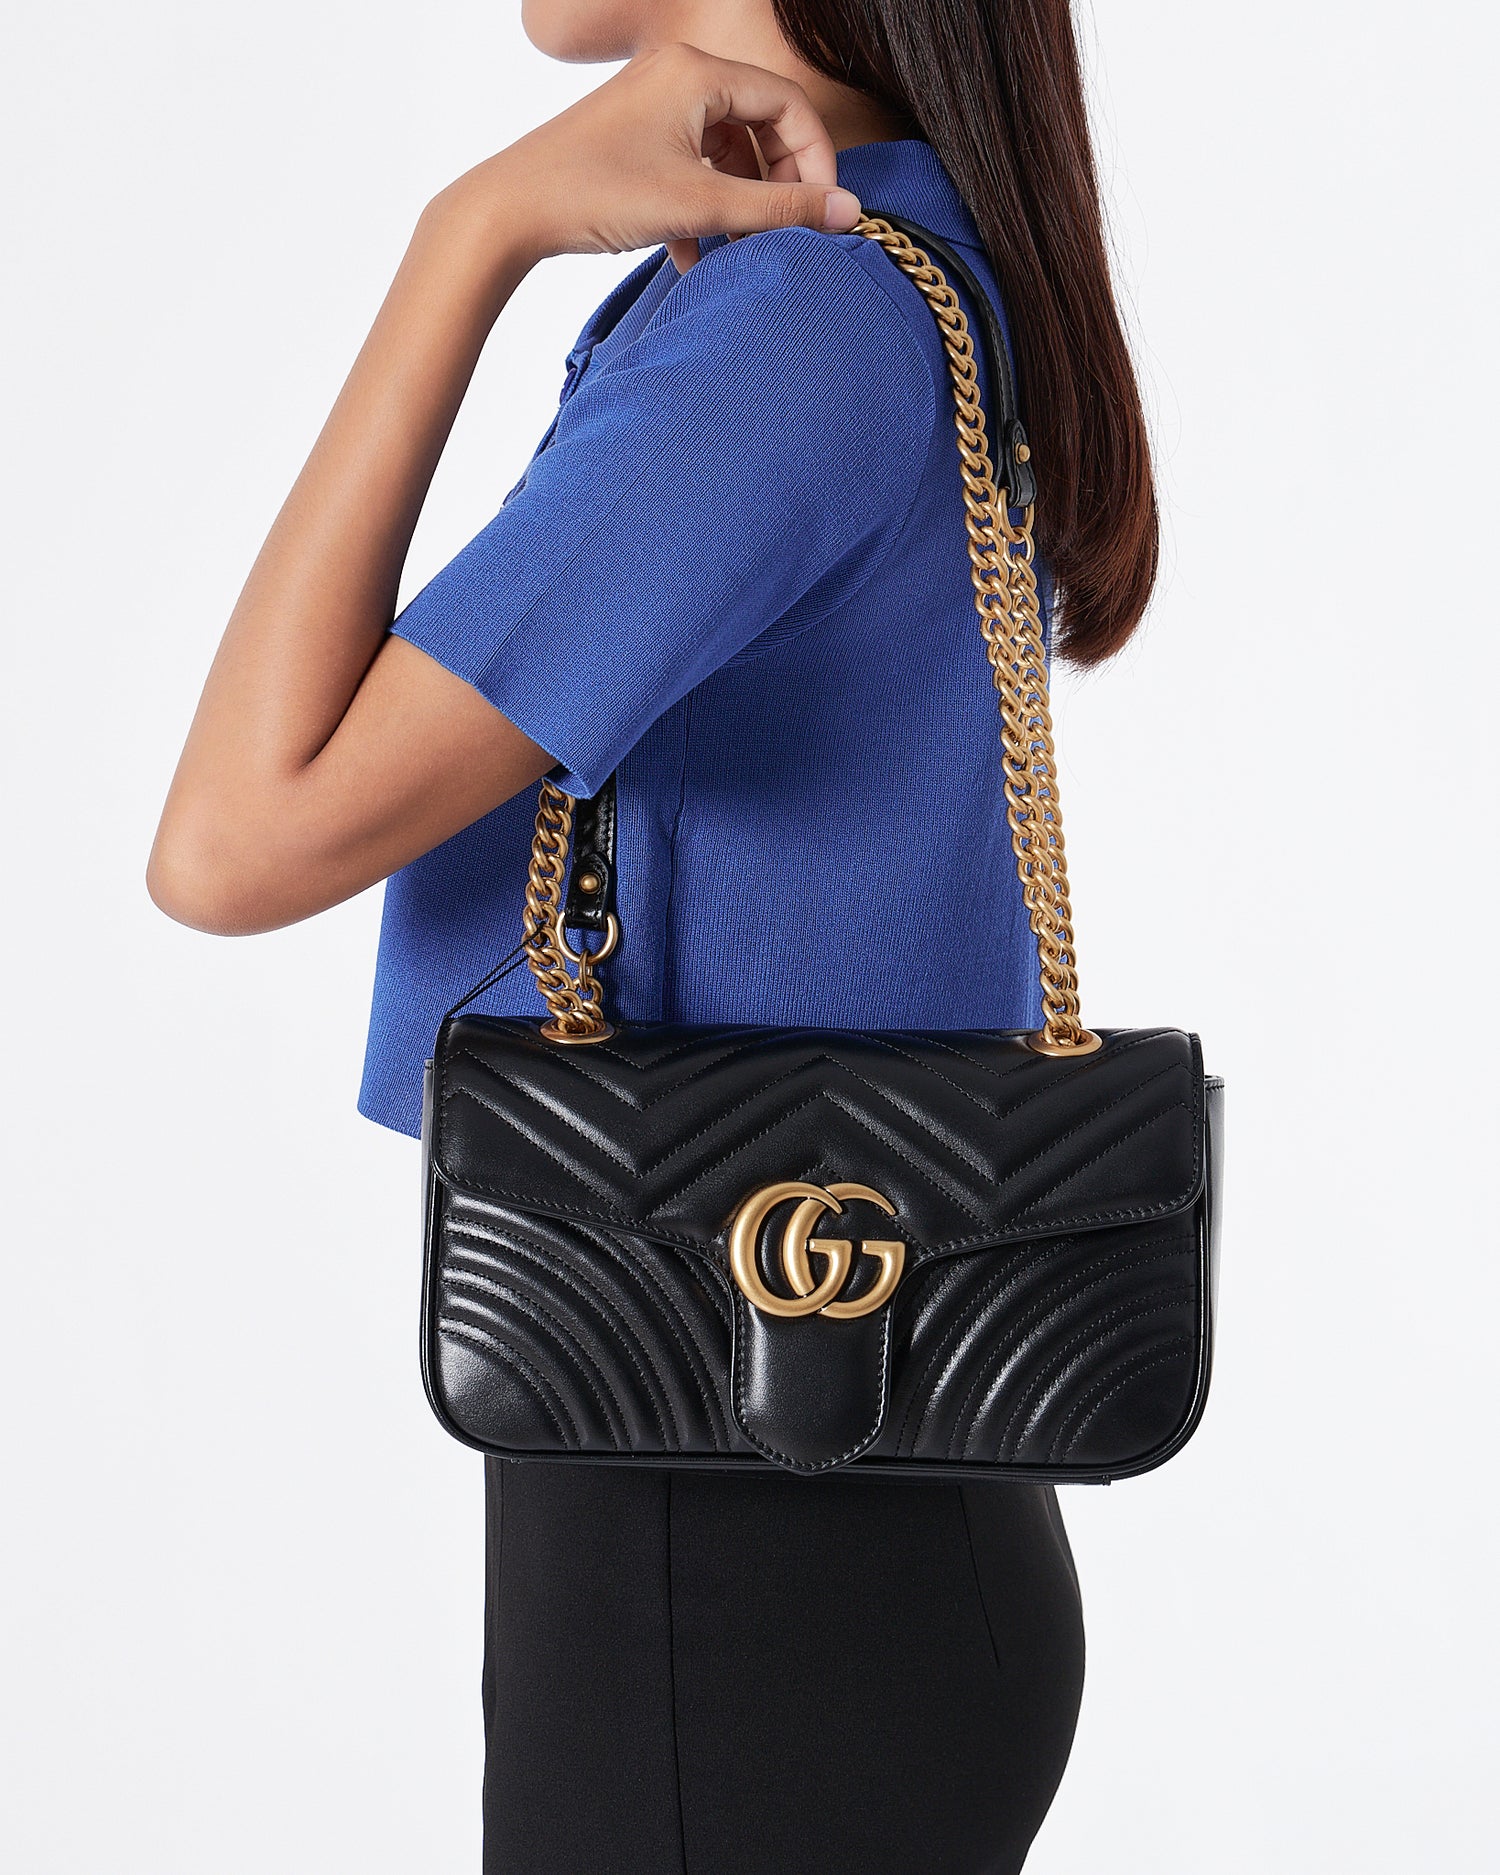 GUC Marmont Lady Black Shoulder Bag 185